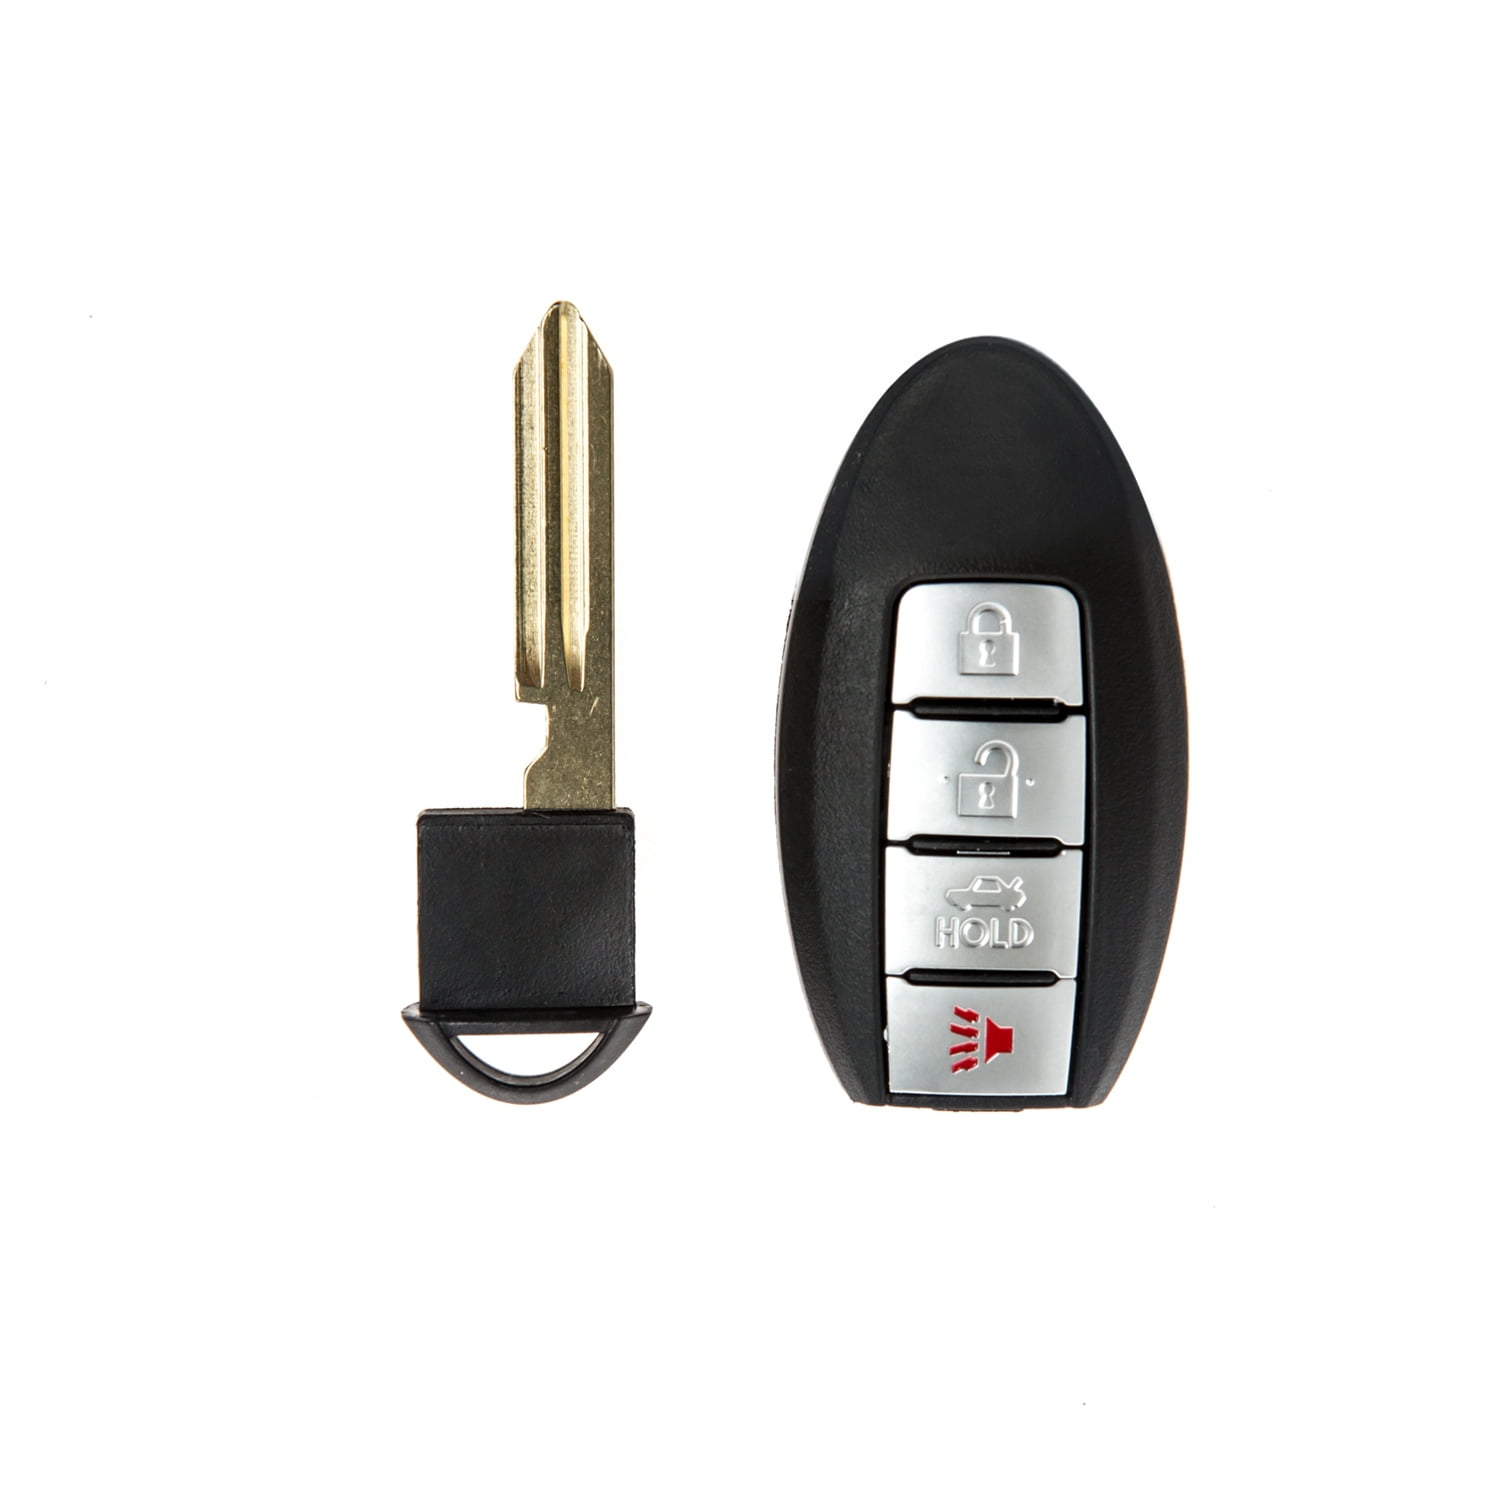 Uncut Smart Insert Emergency Key Blade For Nissan Altima Maxima Sentra Remote 